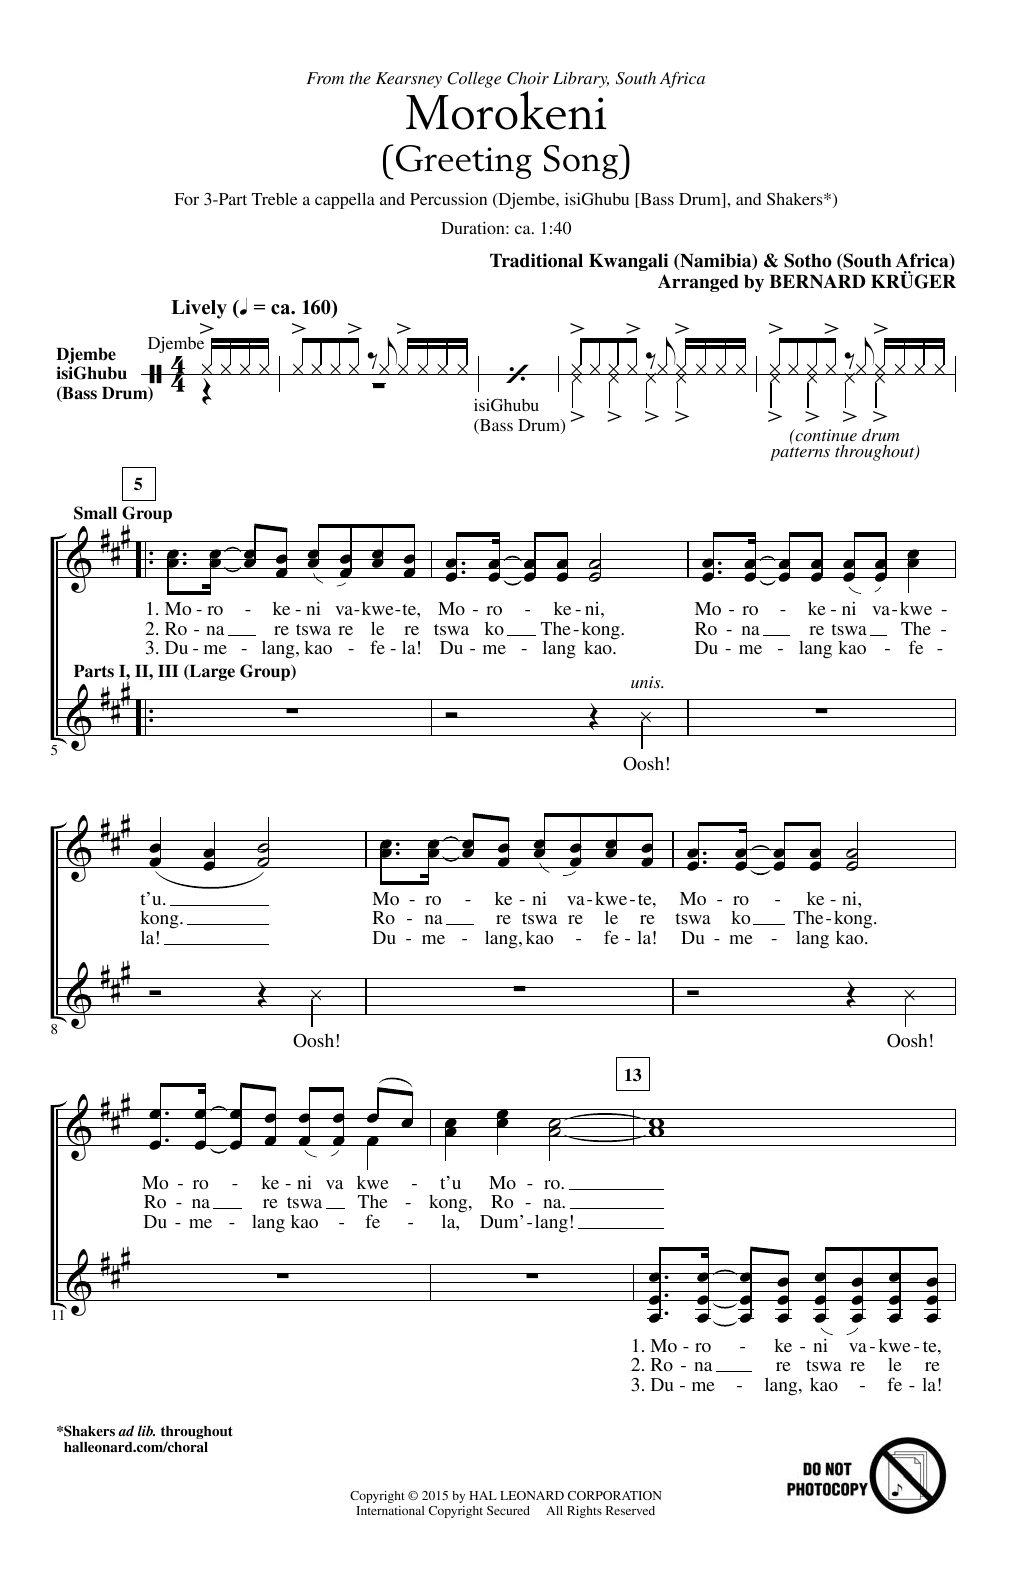 Bernard Krüger Morokeni (Welcome Song) Sheet Music Notes & Chords for 3-Part Treble - Download or Print PDF